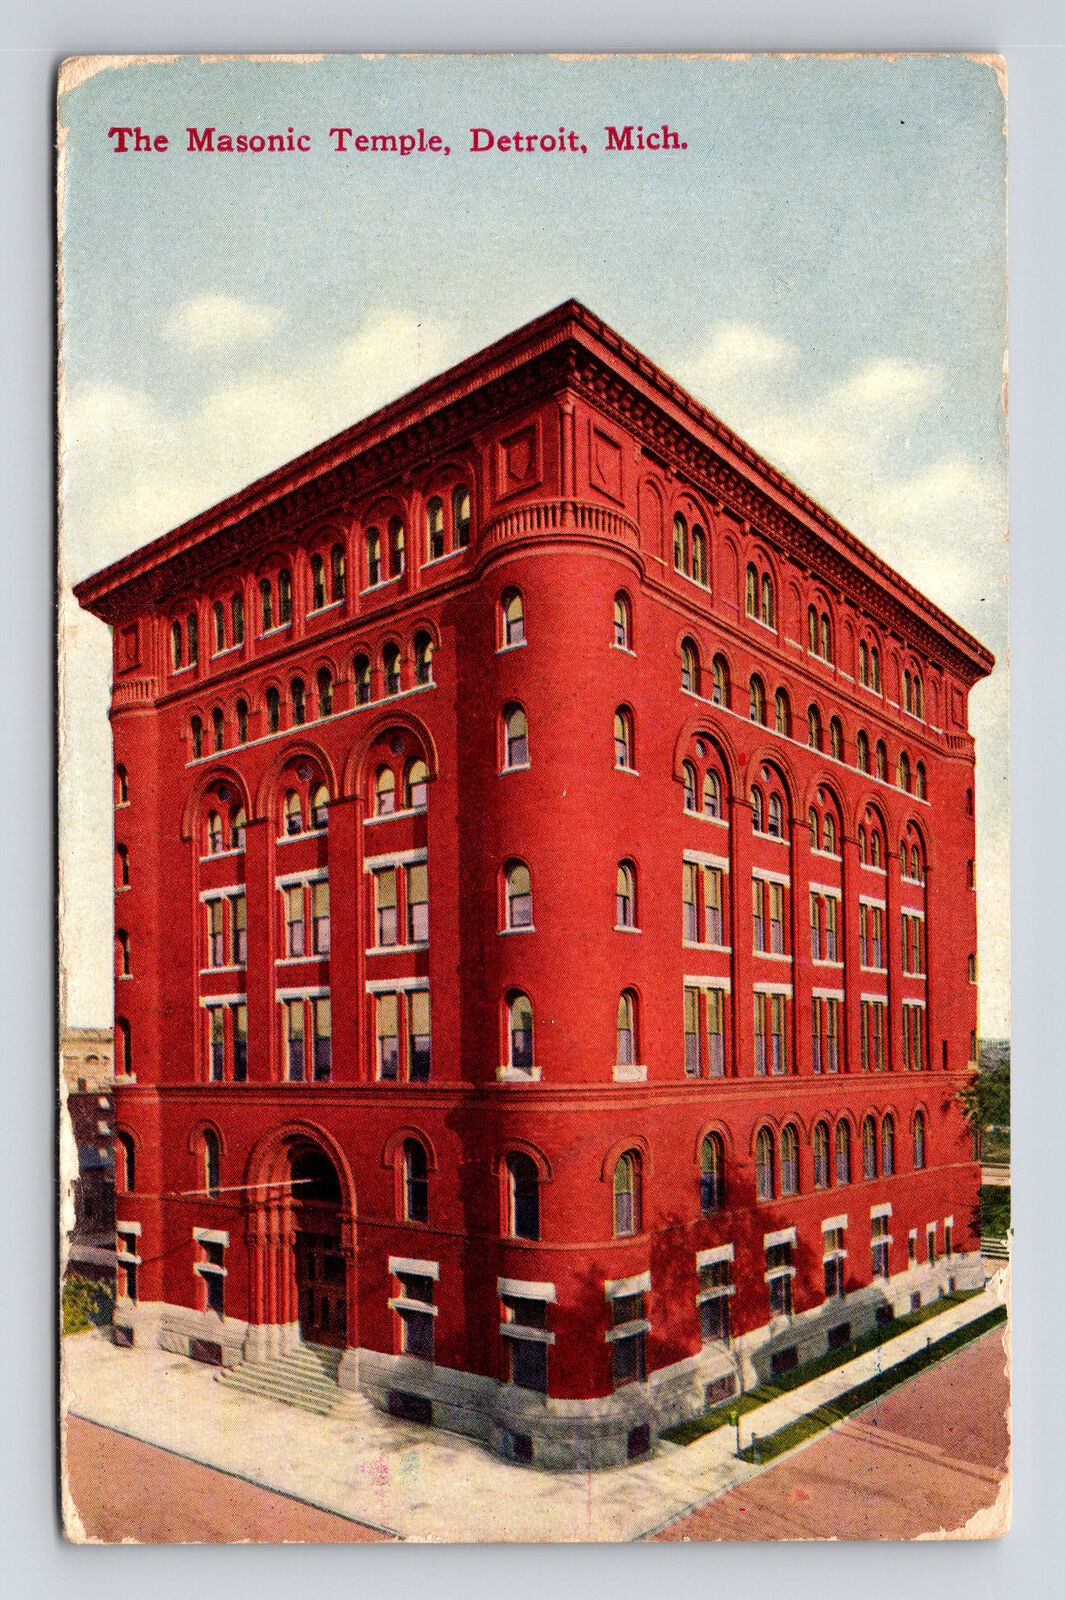 The Masonic Temple Building Lafayette Blvd Detroit Michigan MI Postcard